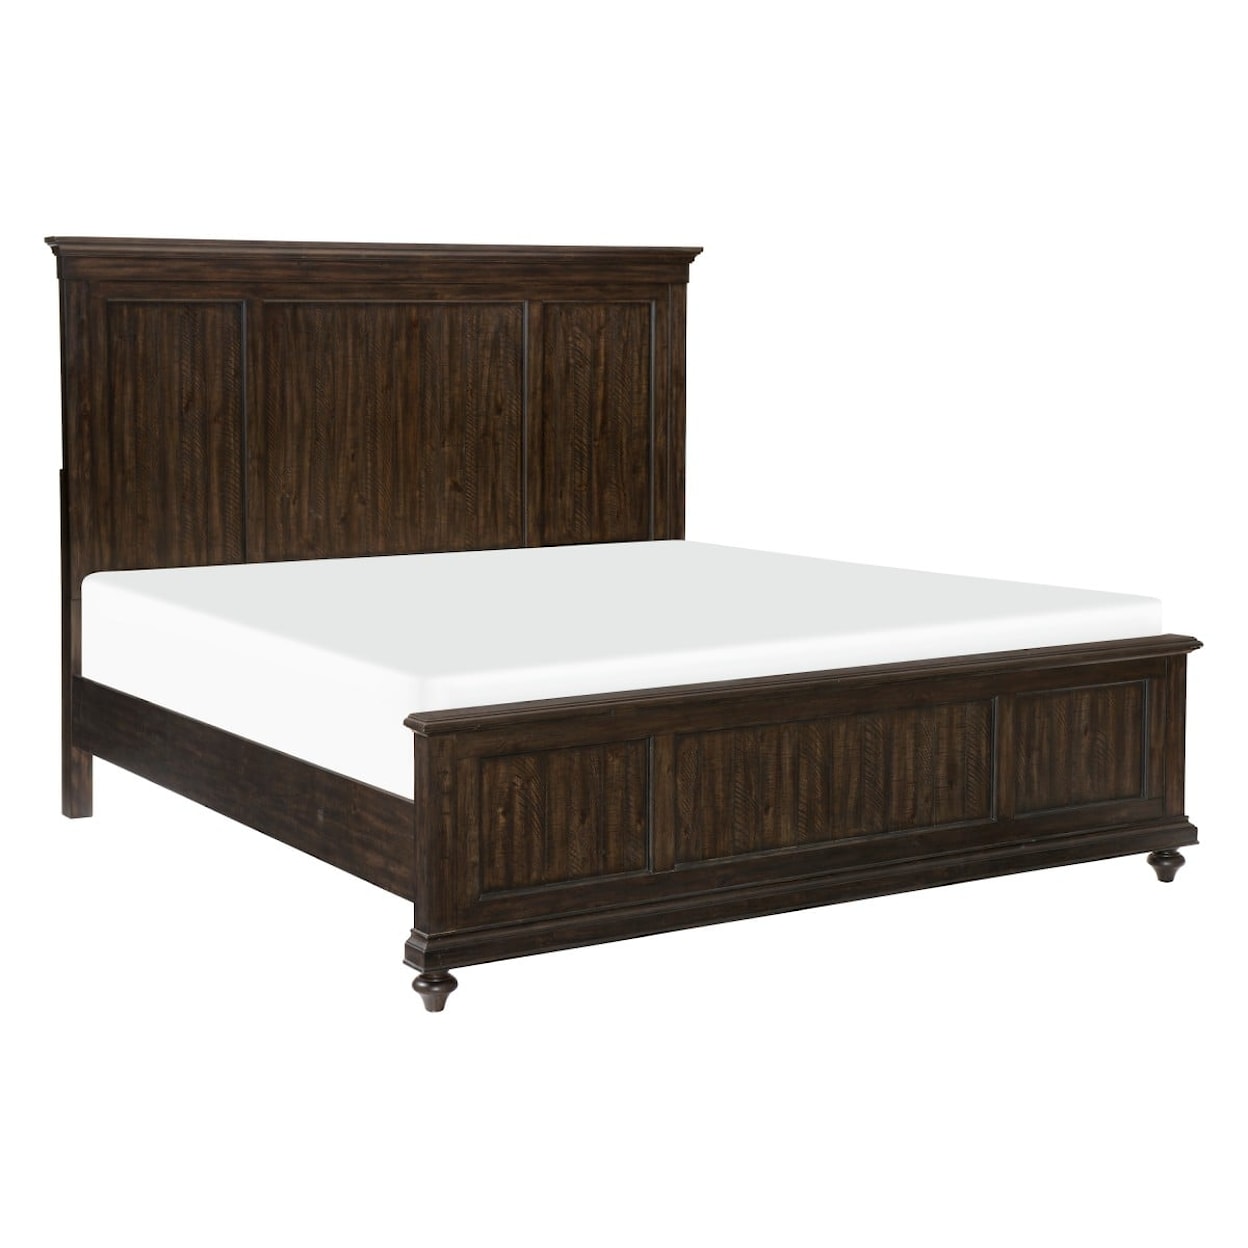 Homelegance Furniture Cardano CA King Bed